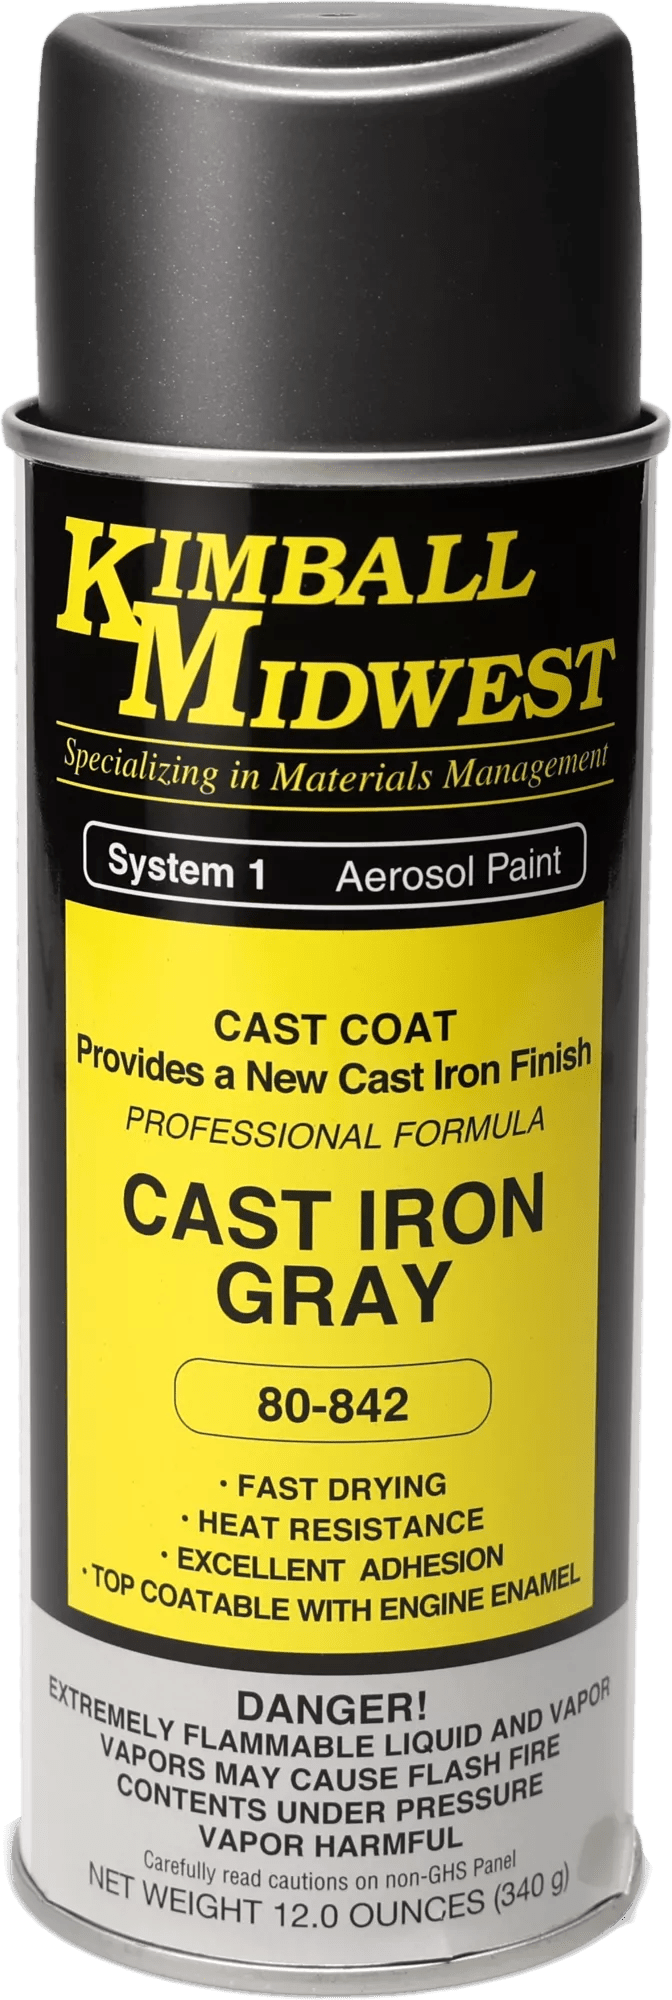 Cast Iron Gray High Temperature Cast Coat